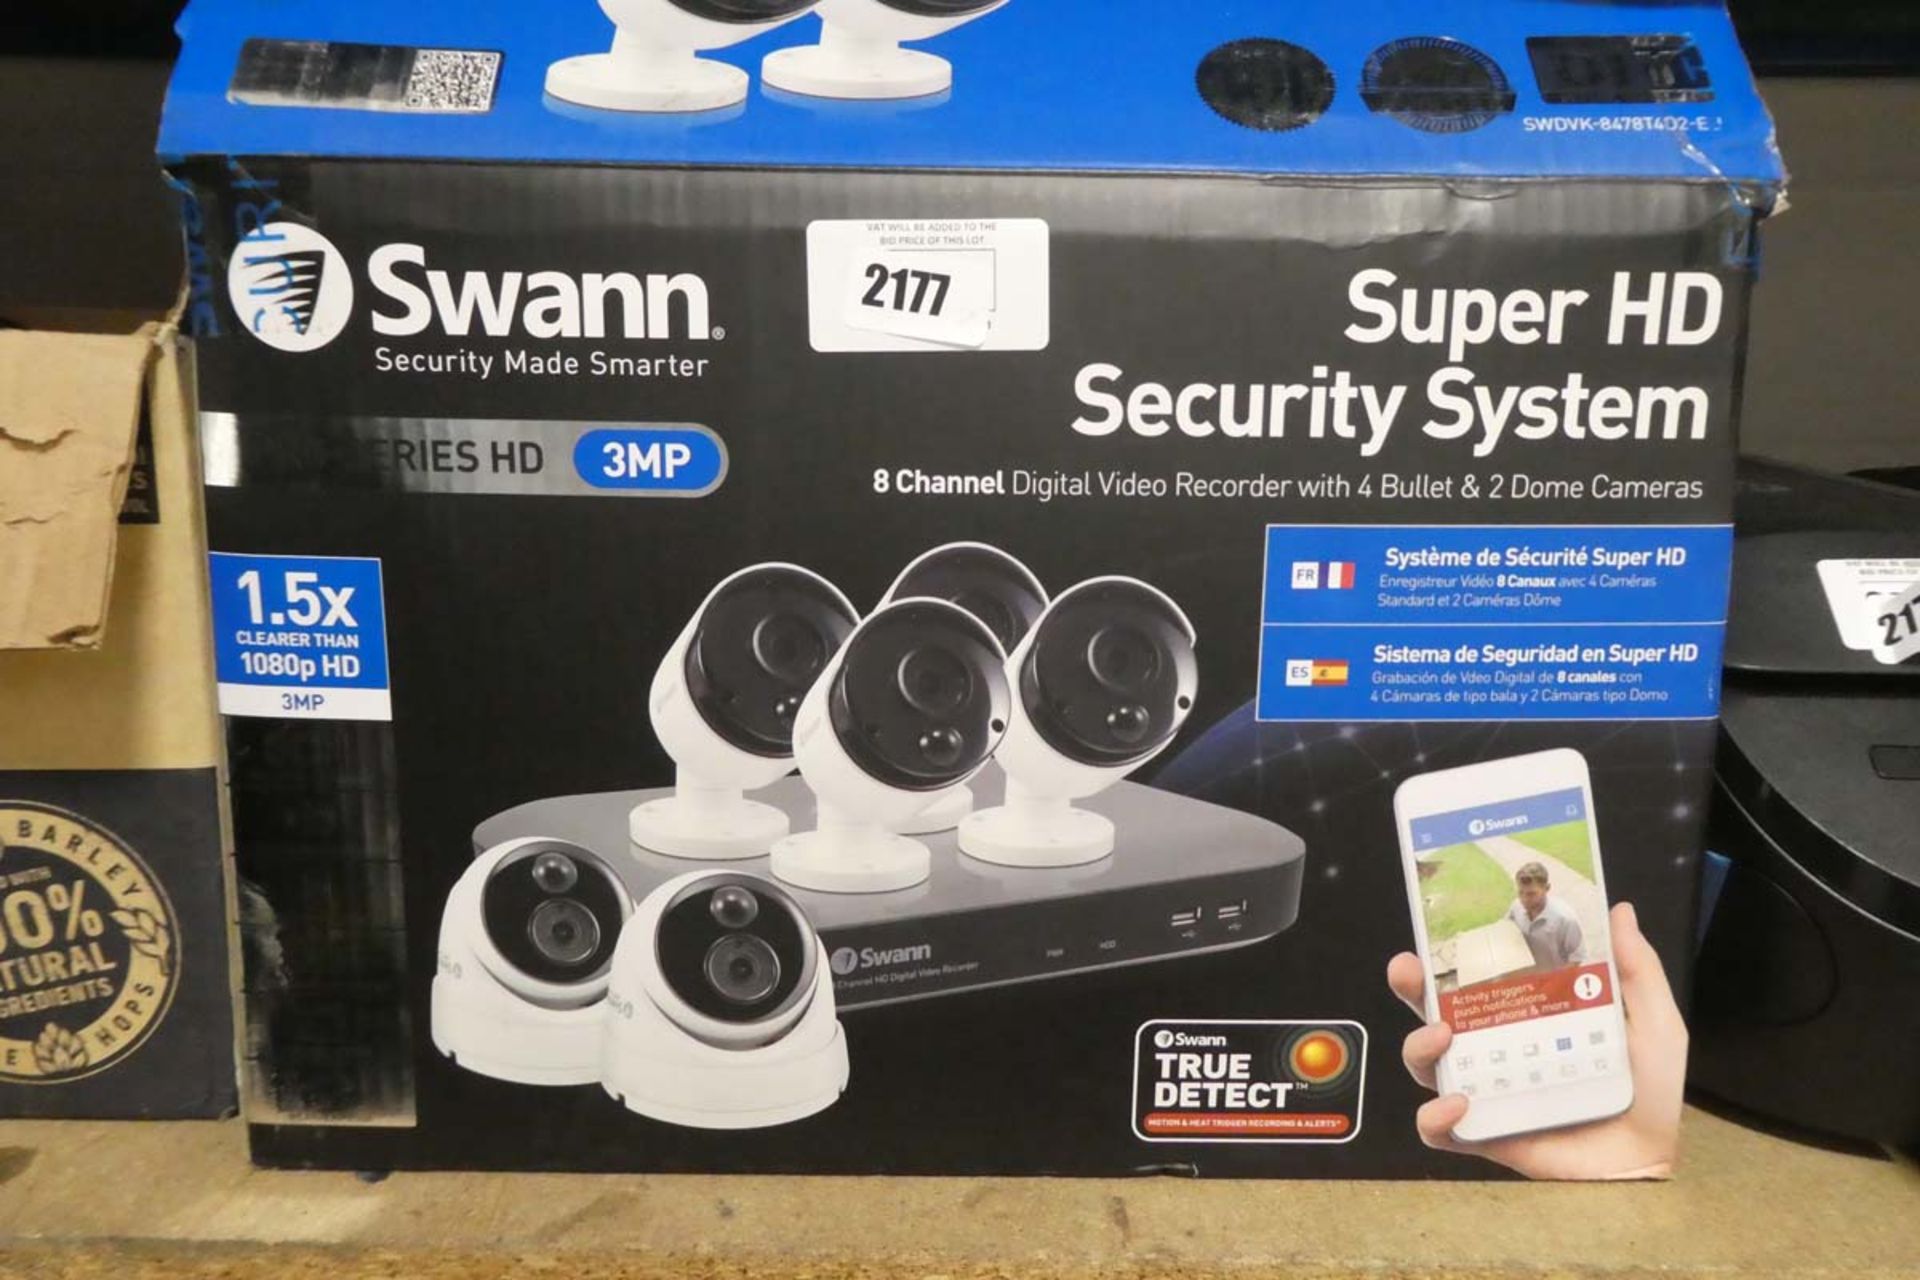 Swan Pro Series HD CCTV camera kit in box